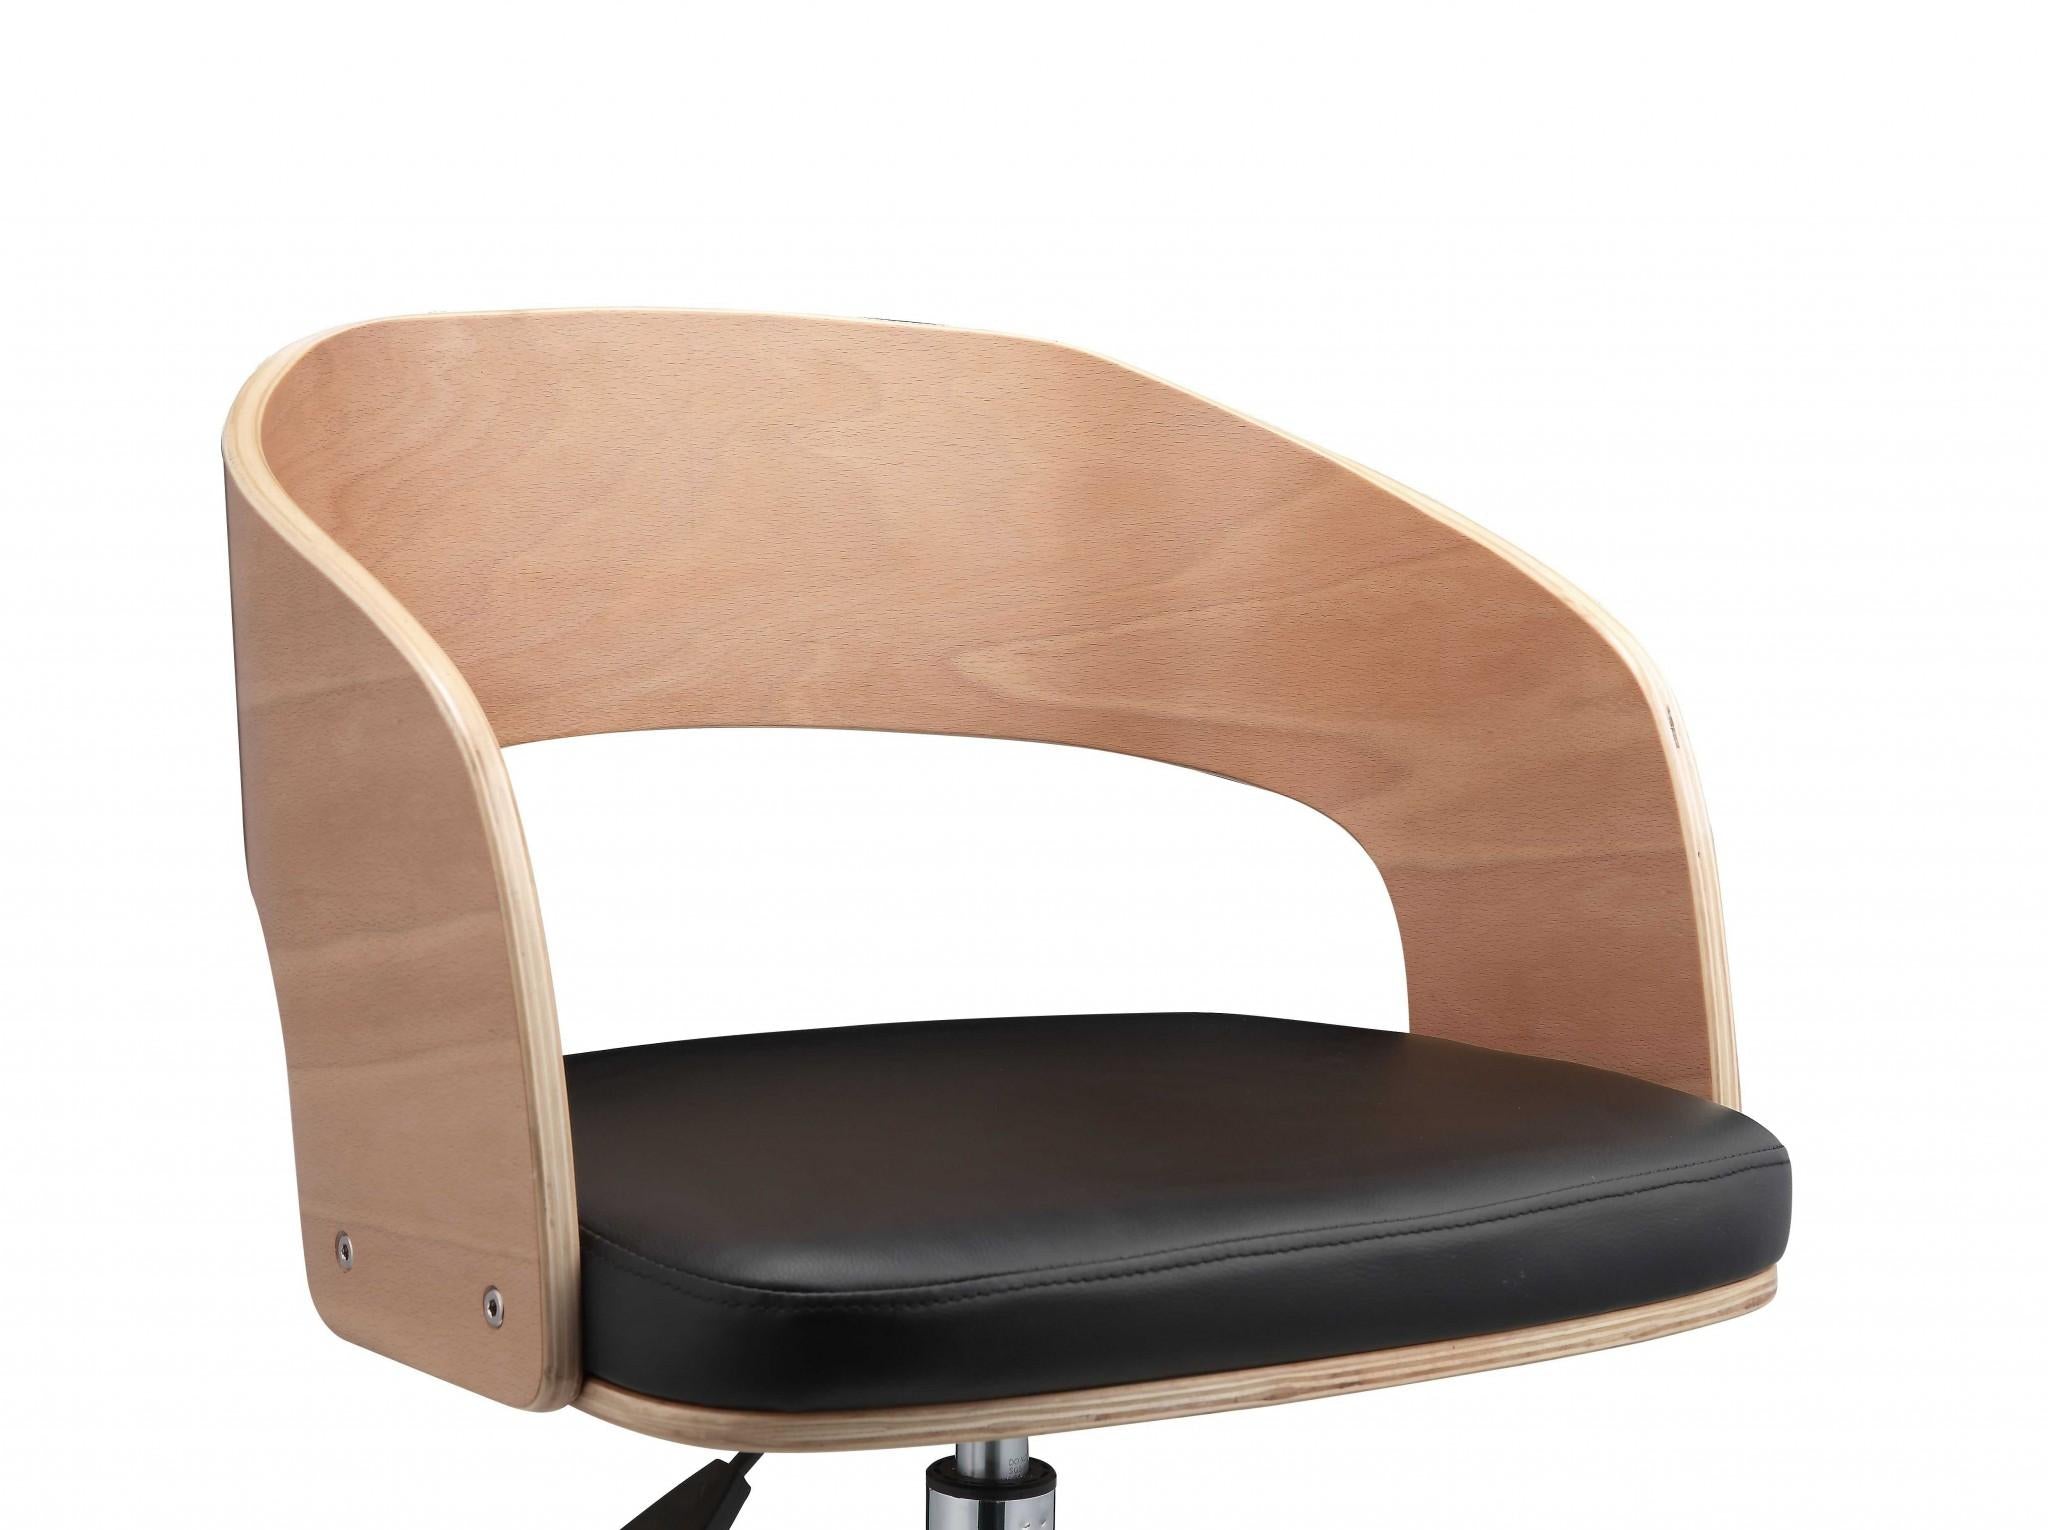 Mod Rolling Black Faux Leather Office Desk Chair